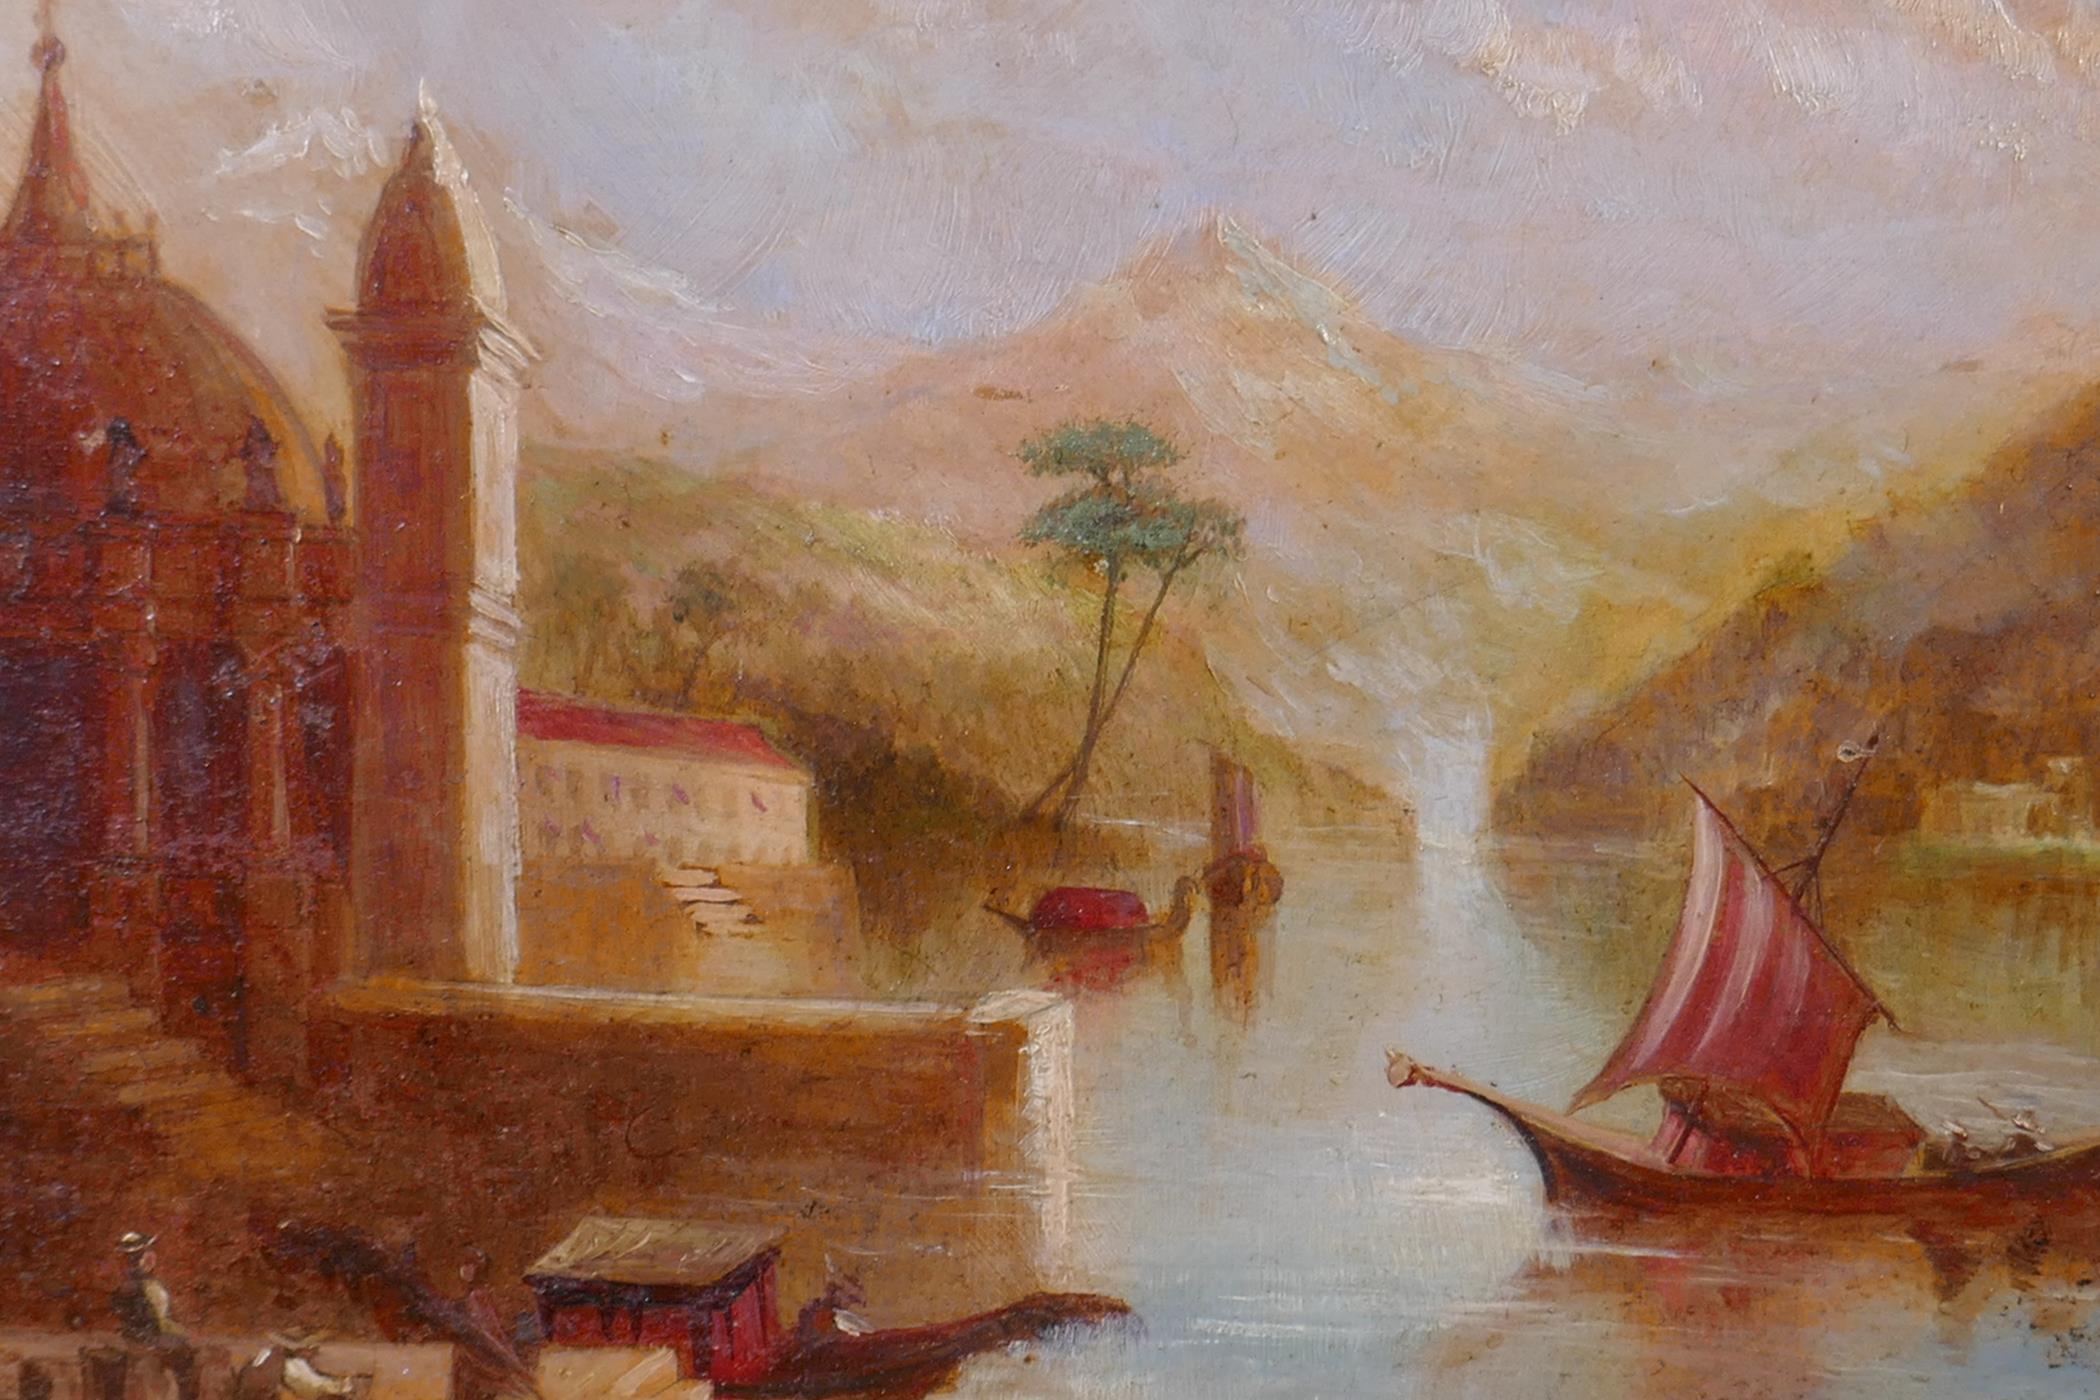 Capriccio port scene with figures and boats, C19th oil on board, 17 x 27cm